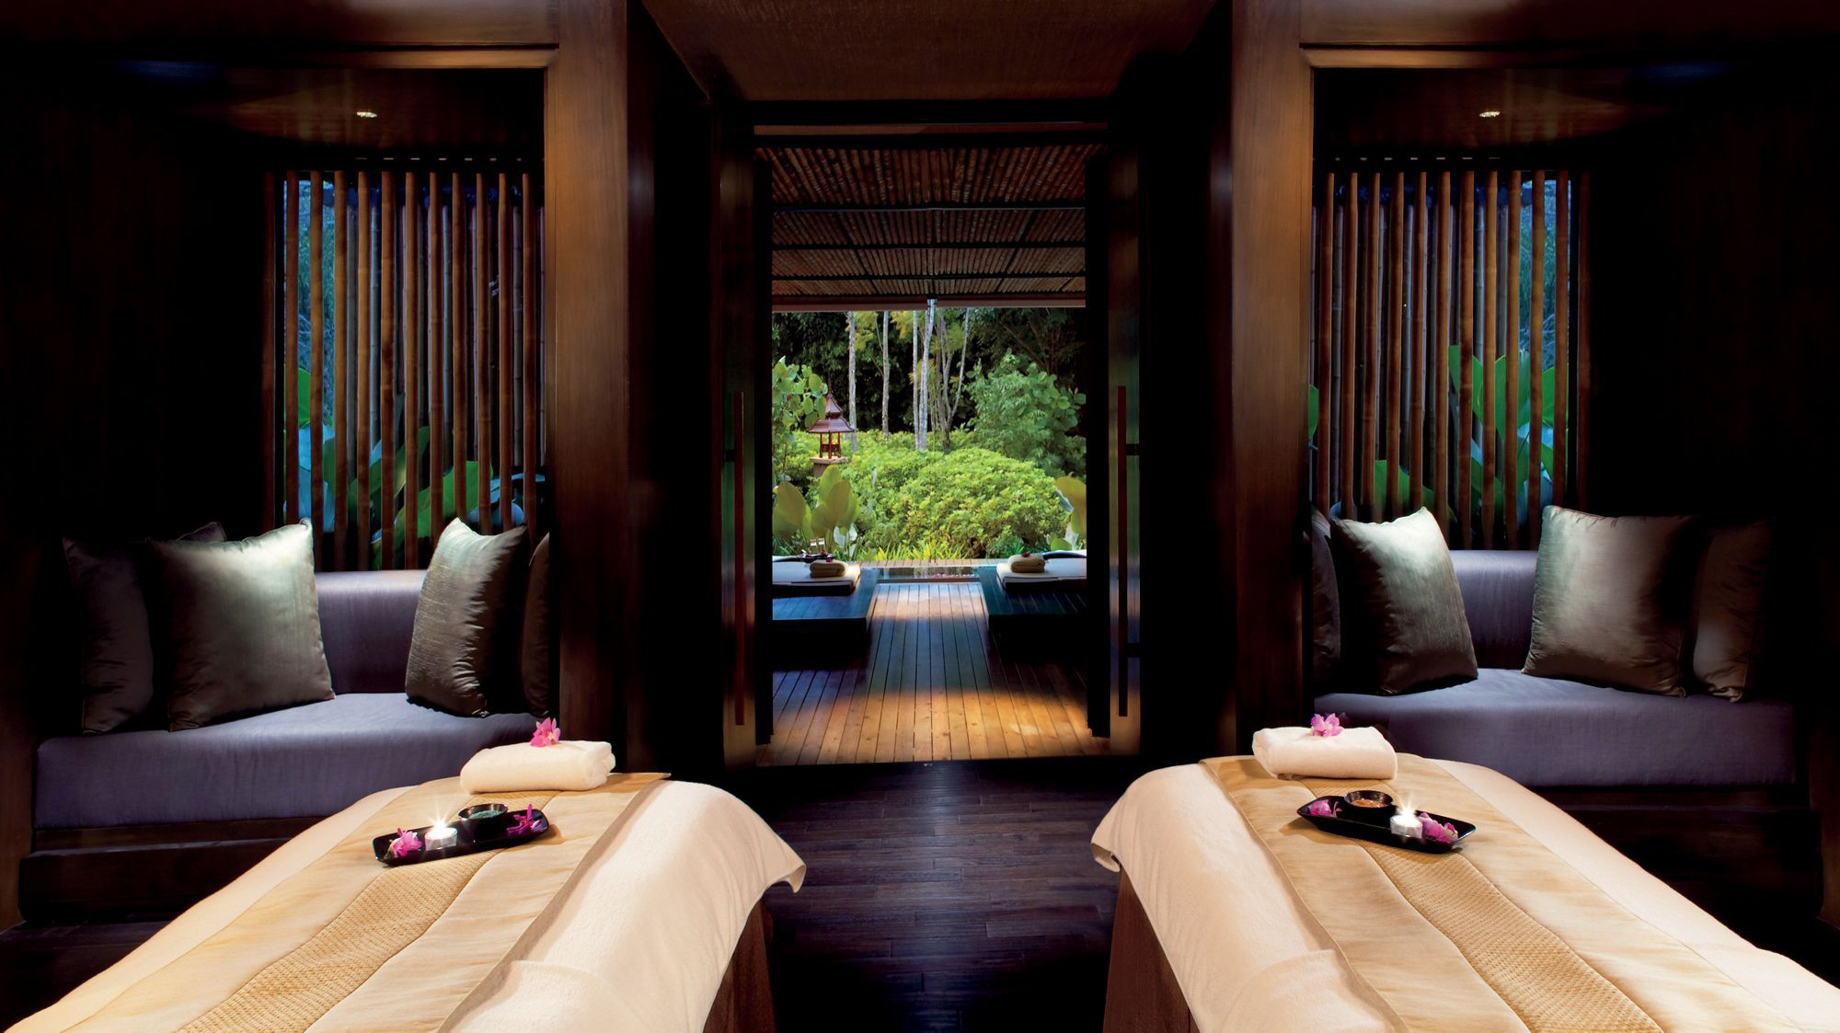 The Ritz-Carlton, Phulay Bay Reserve Resort - Muang Krabi, Thailand - Spa Treatment Room